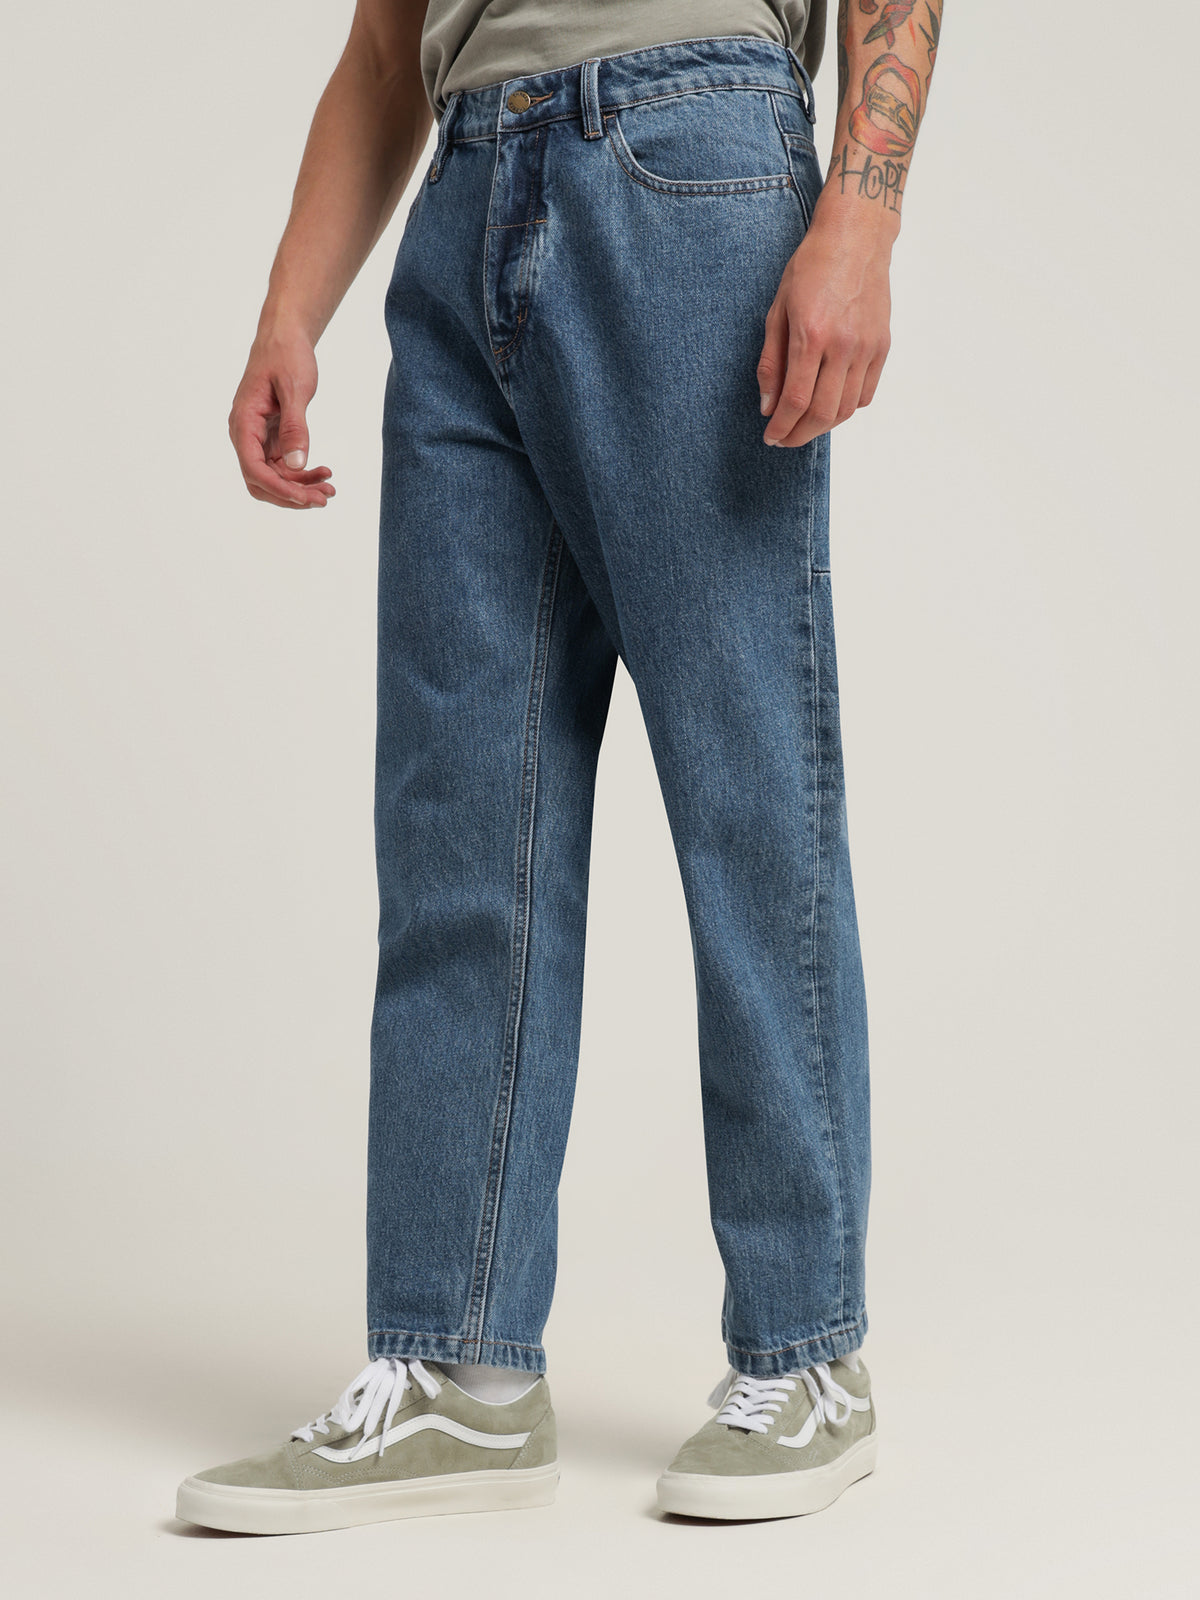 Slacker Denim Jeans in Highway Blue